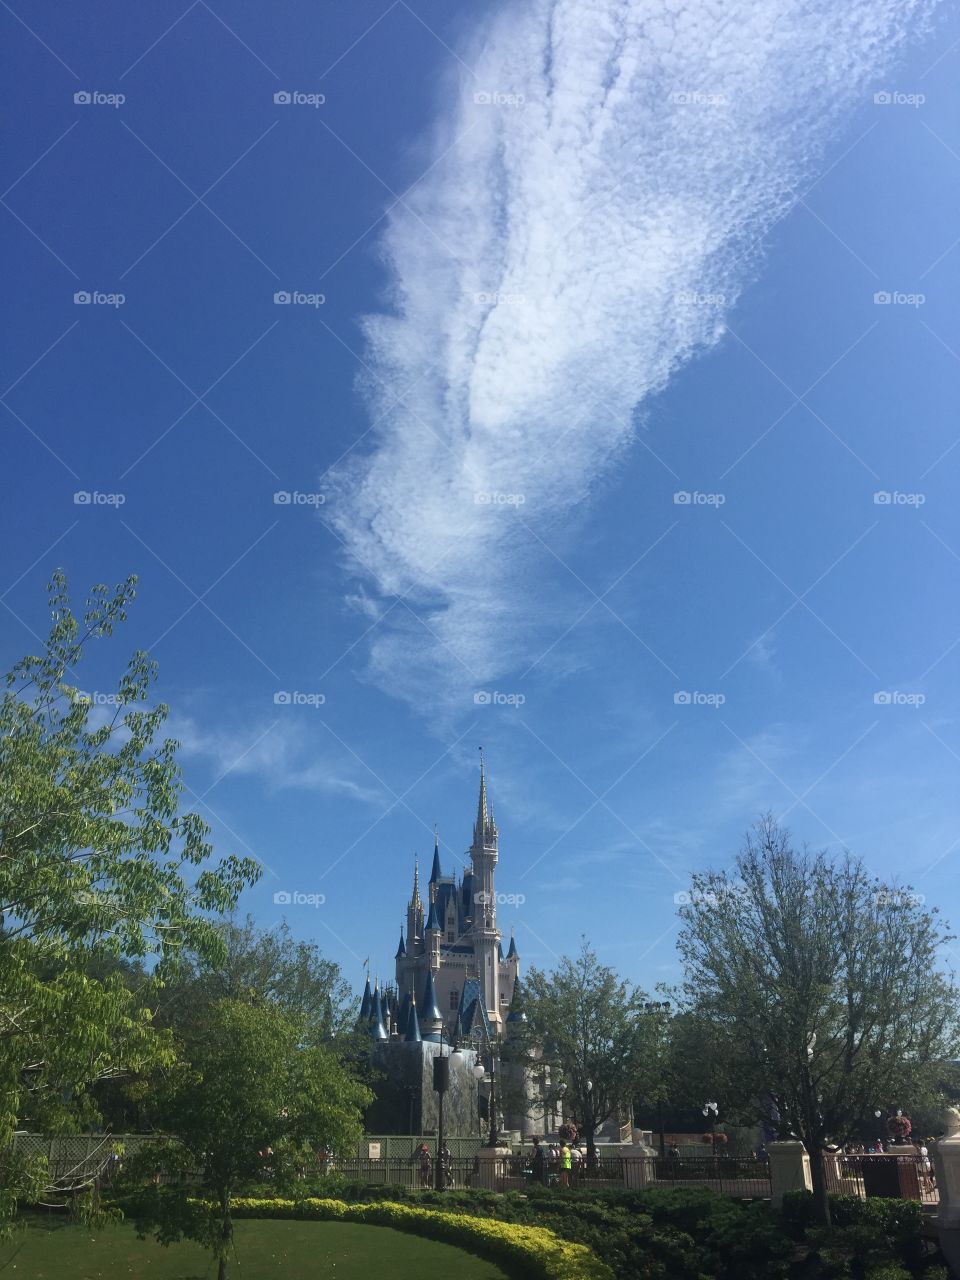 Magic Kingdom. Disney World